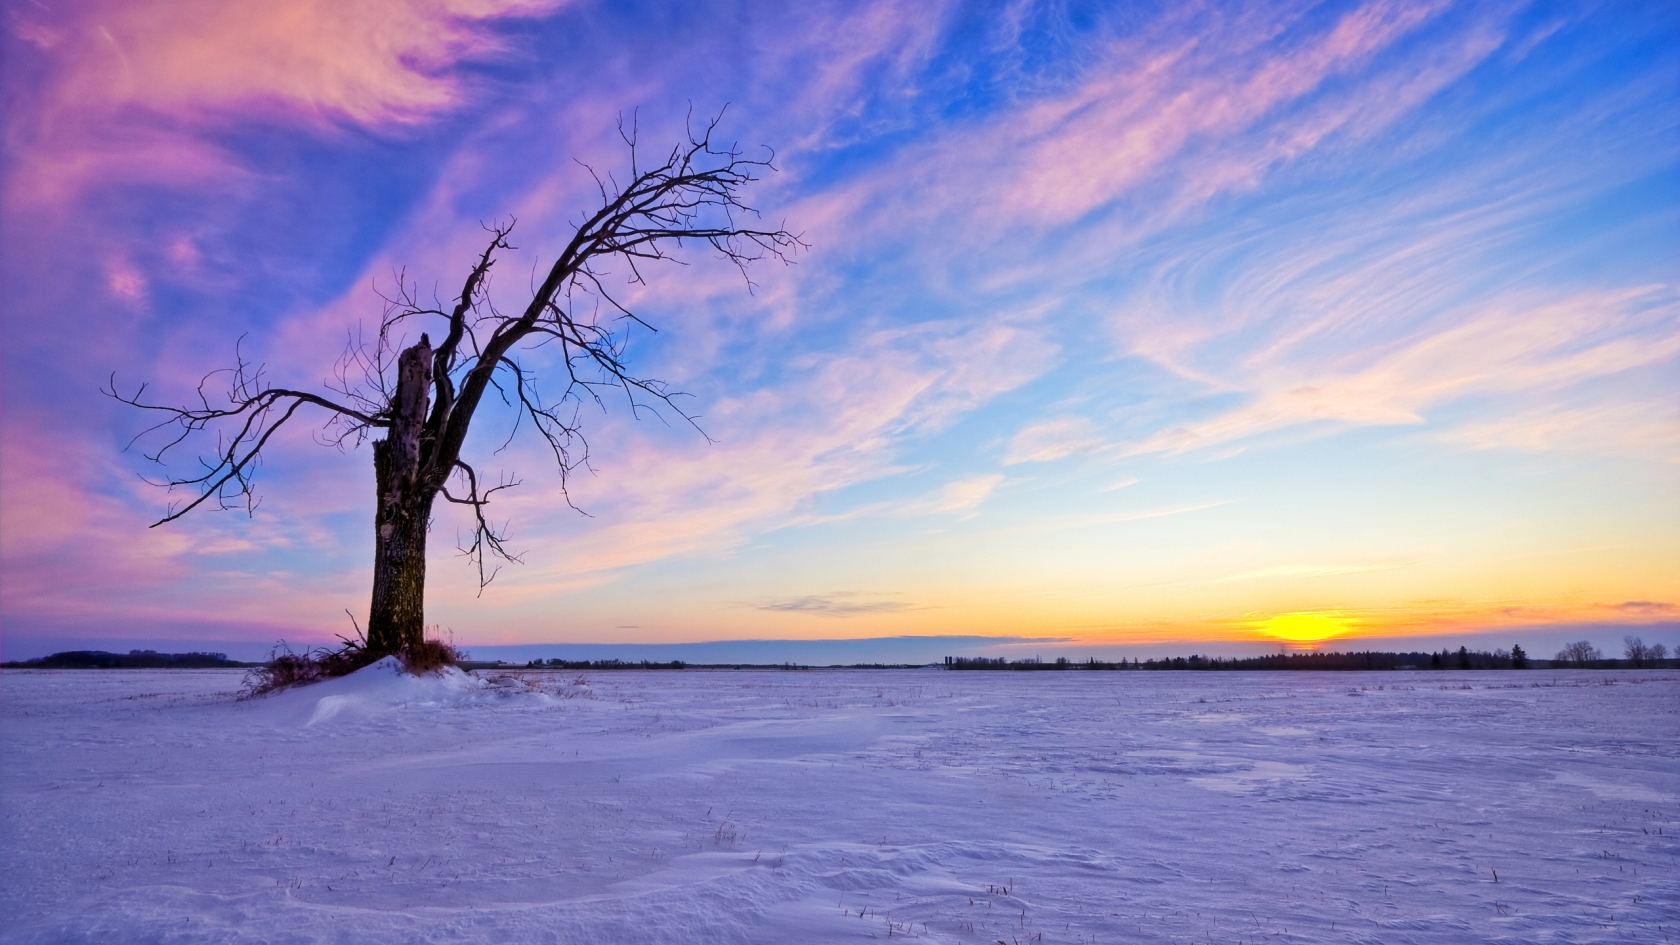 Beautiful Winter Sunset for 1680 x 945 HDTV resolution